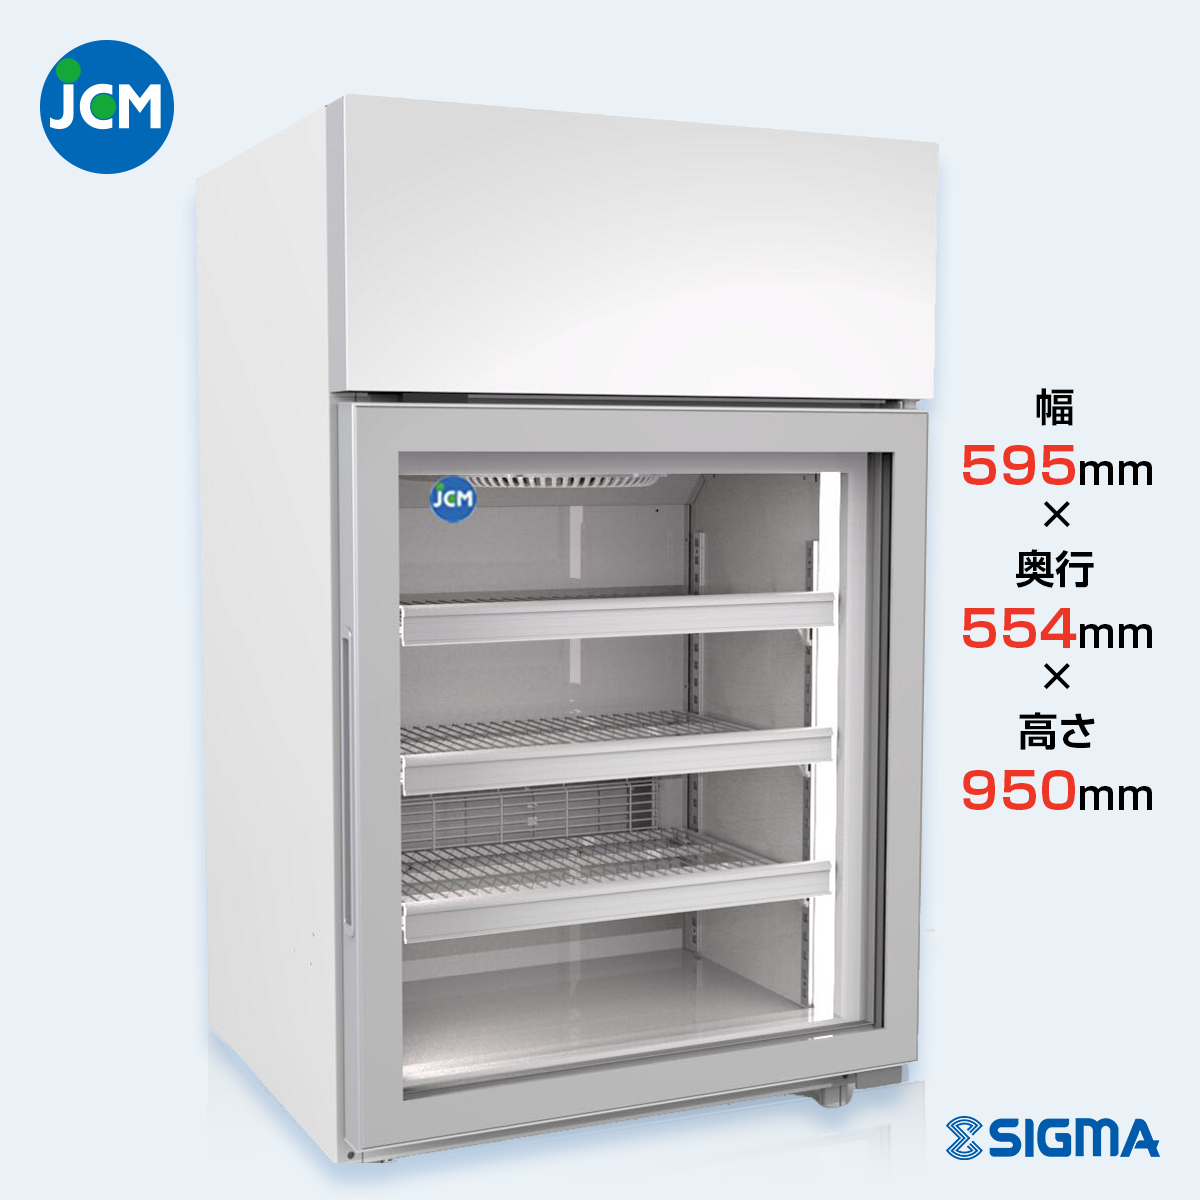 JCMCS-70H 卓上型冷凍ショーケース／幅595×奥行554×高さ950mm